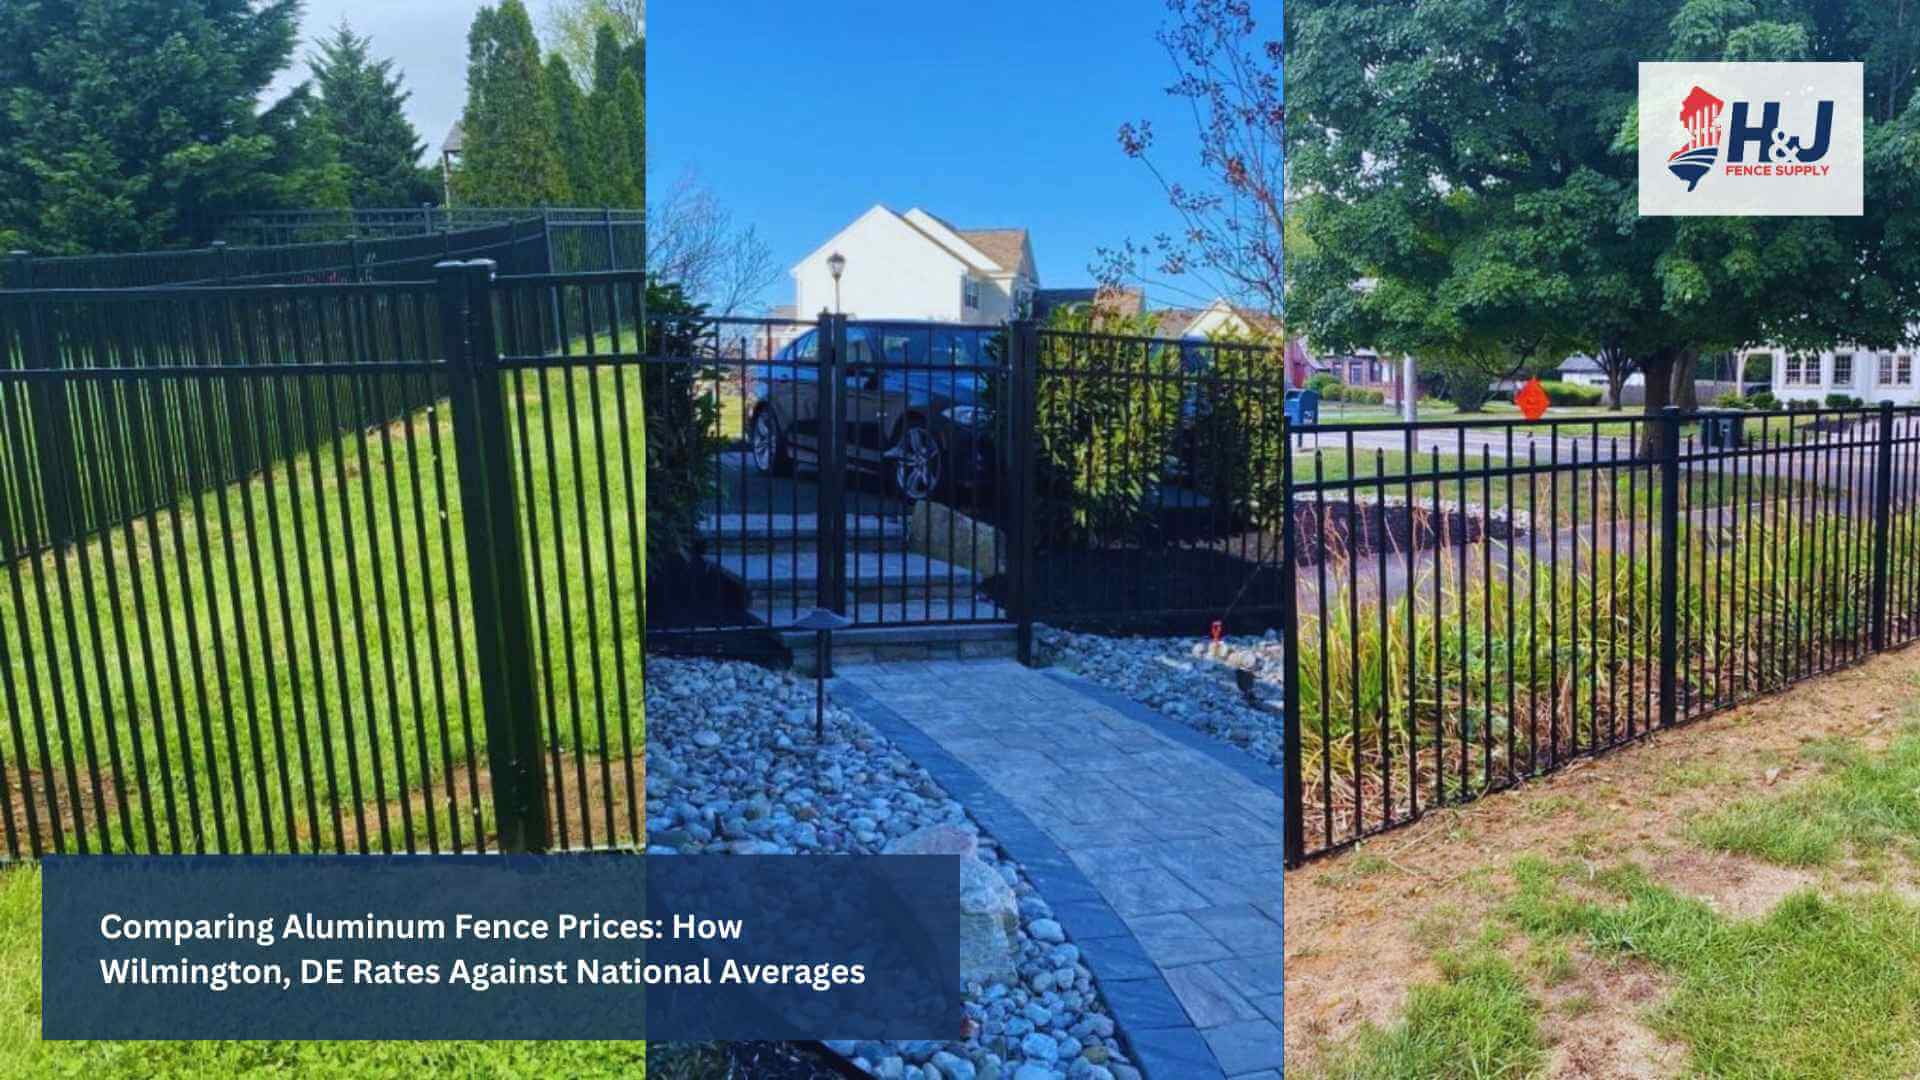 Comparing Aluminum Fence Prices: How Wilmington, DE Rates Against National Averages